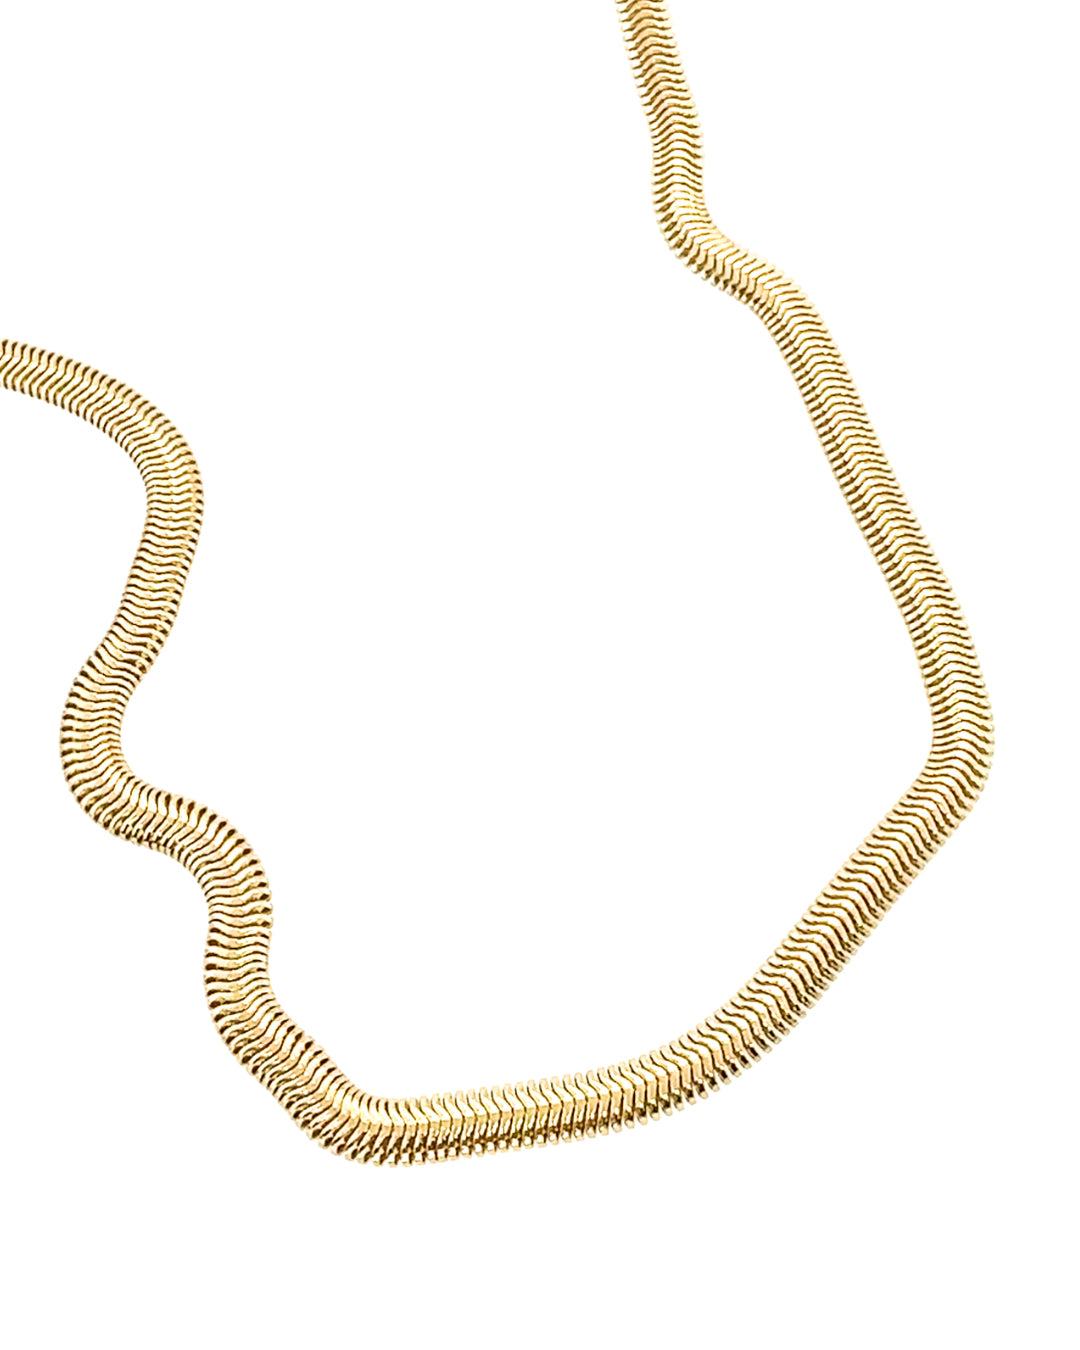 14k gold fill 5mm snake herringbone serpentine necklace 